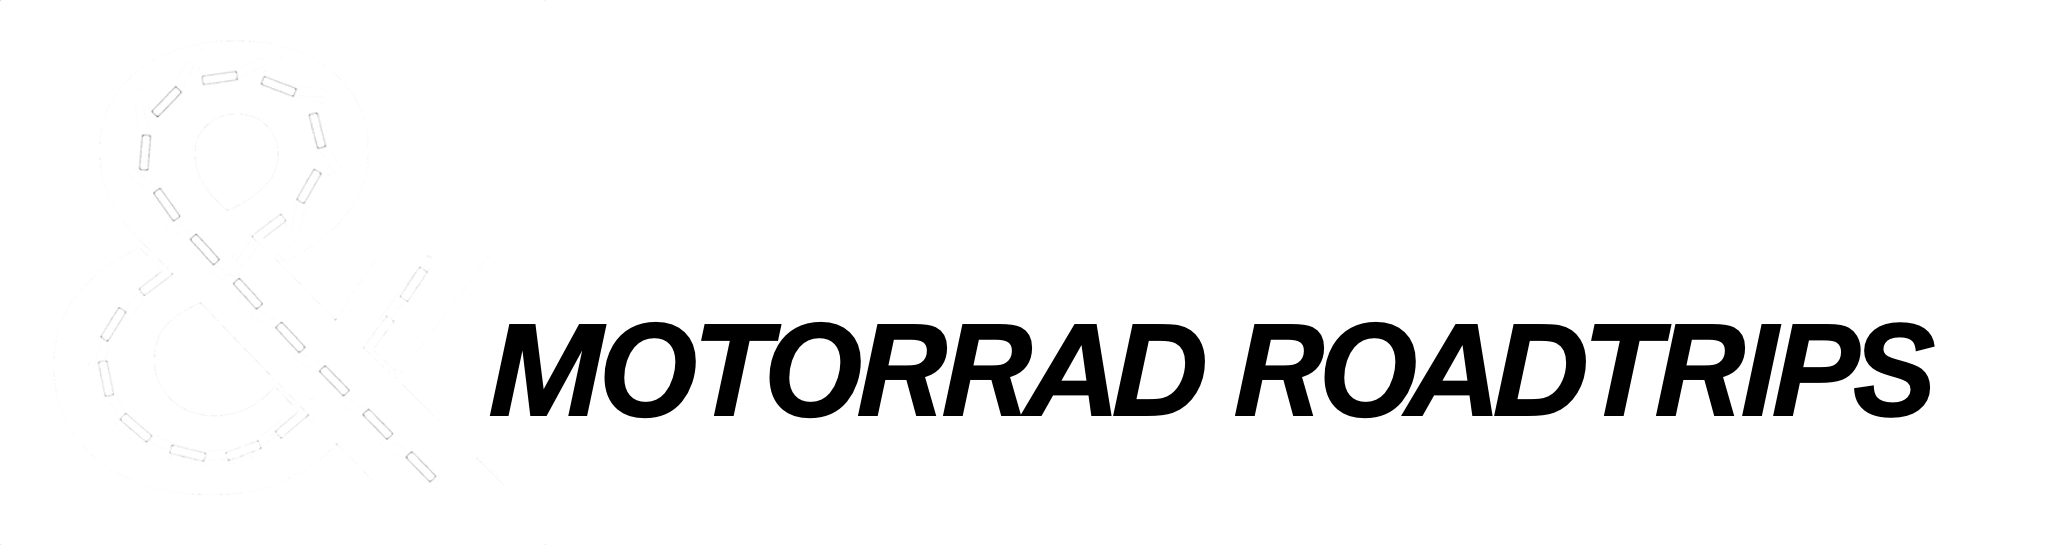 MOTORRAD ROADTRIPS - Premium Australian Motorcycle Road Touring